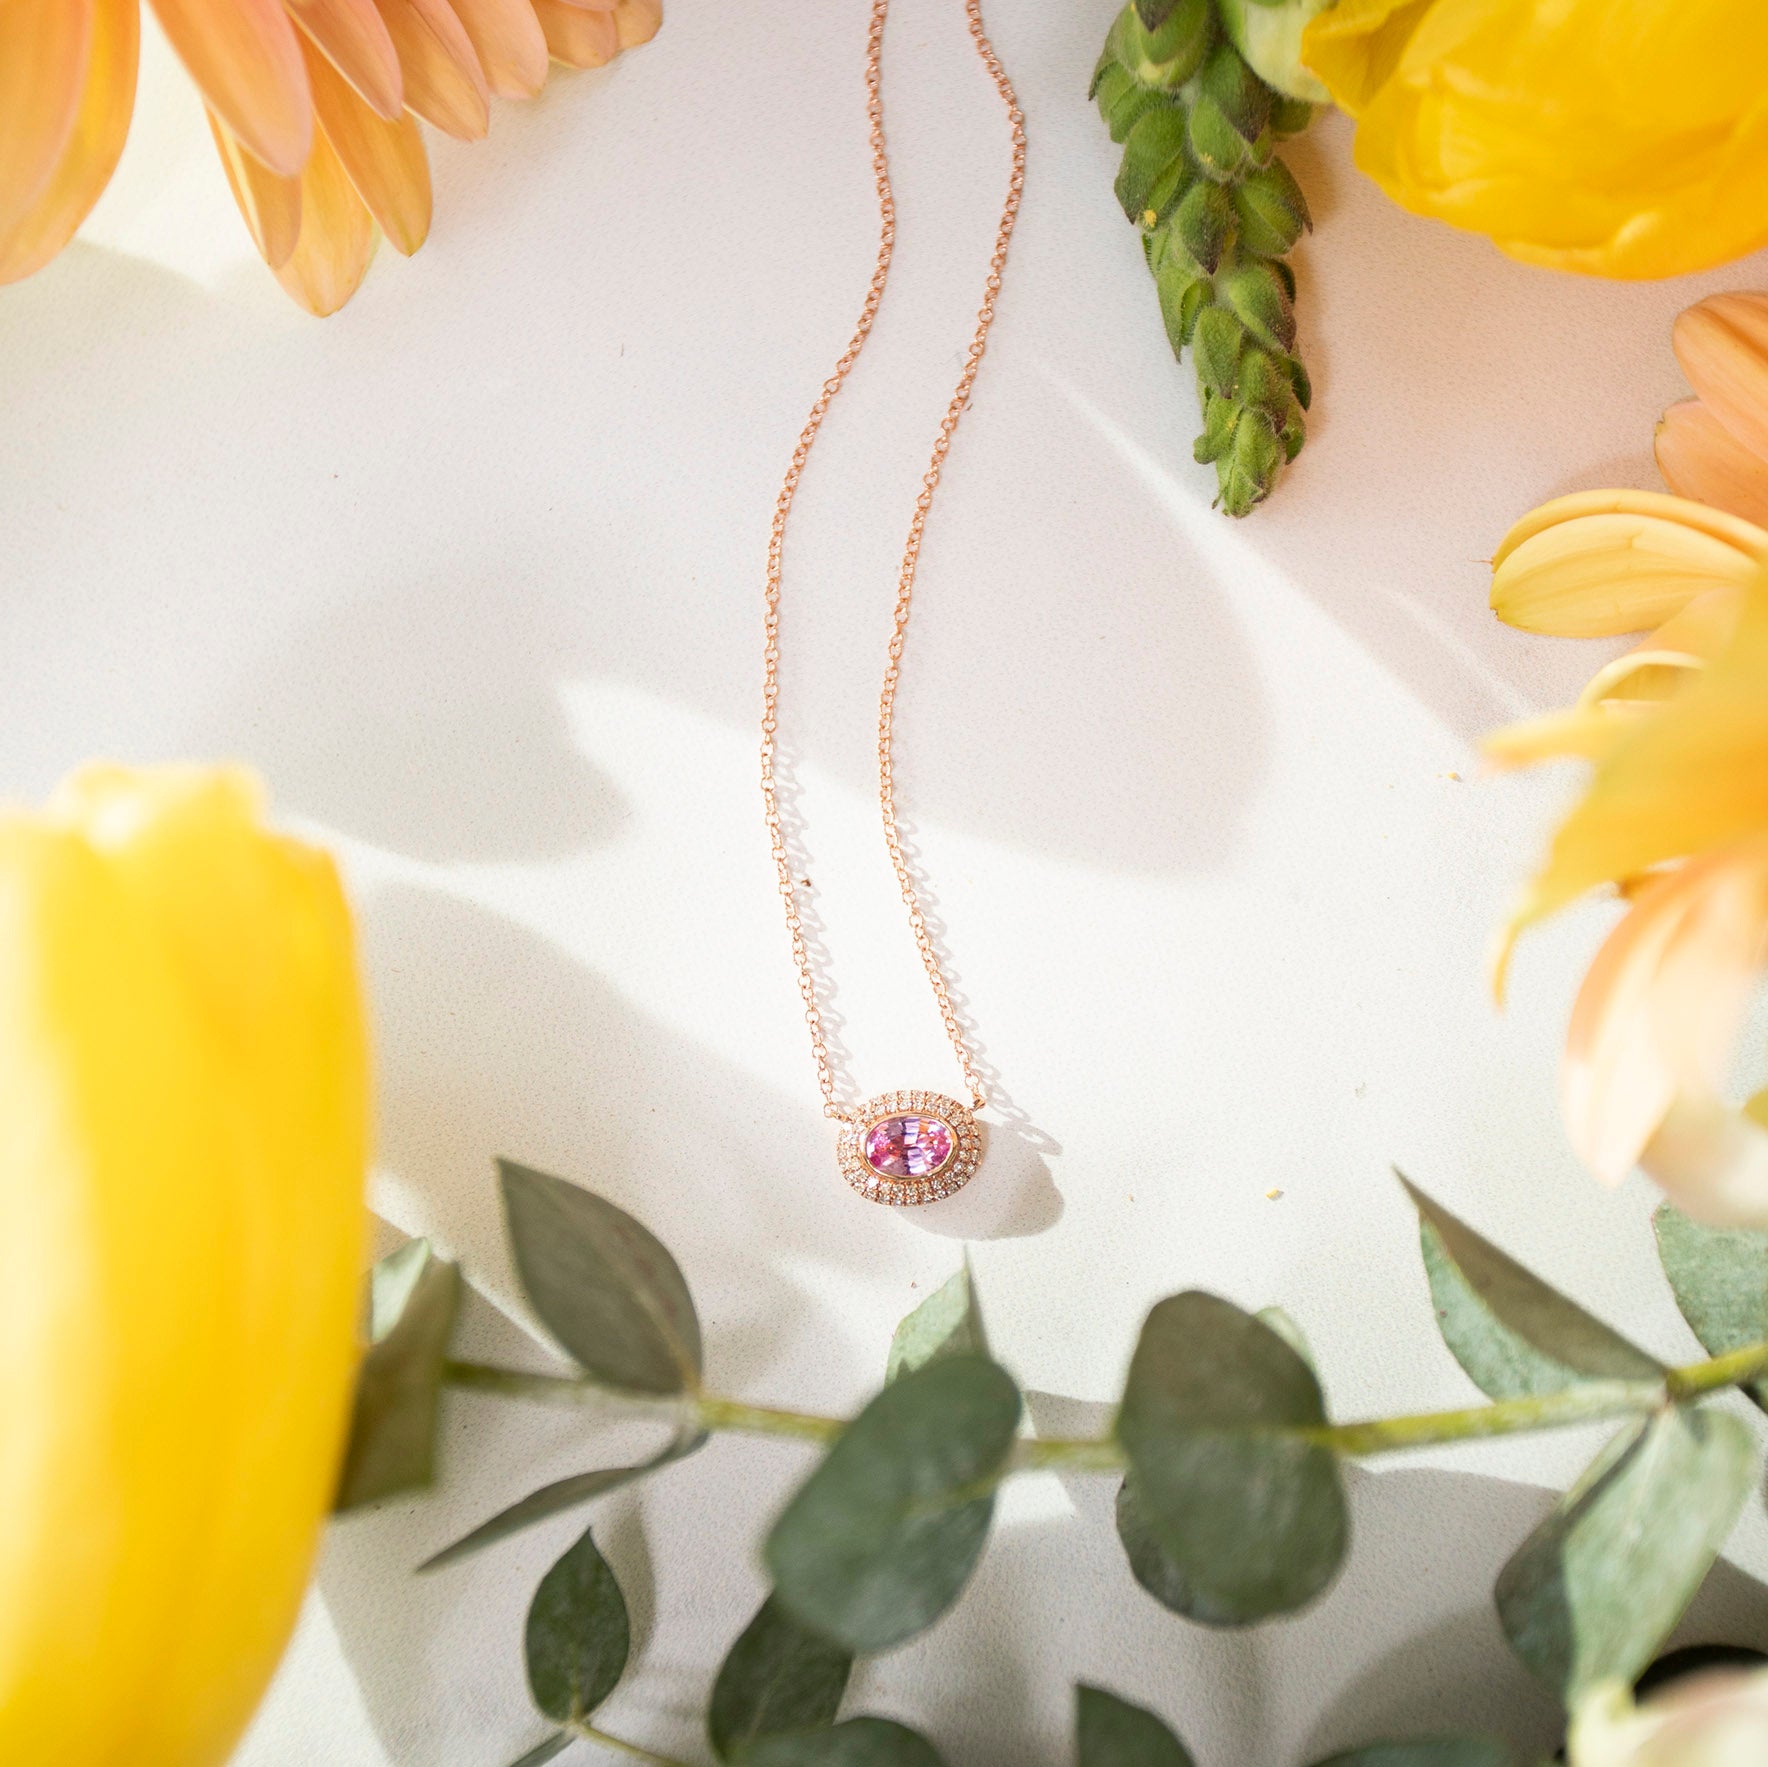 Pink Sapphire Flower Pendant Rose Gold